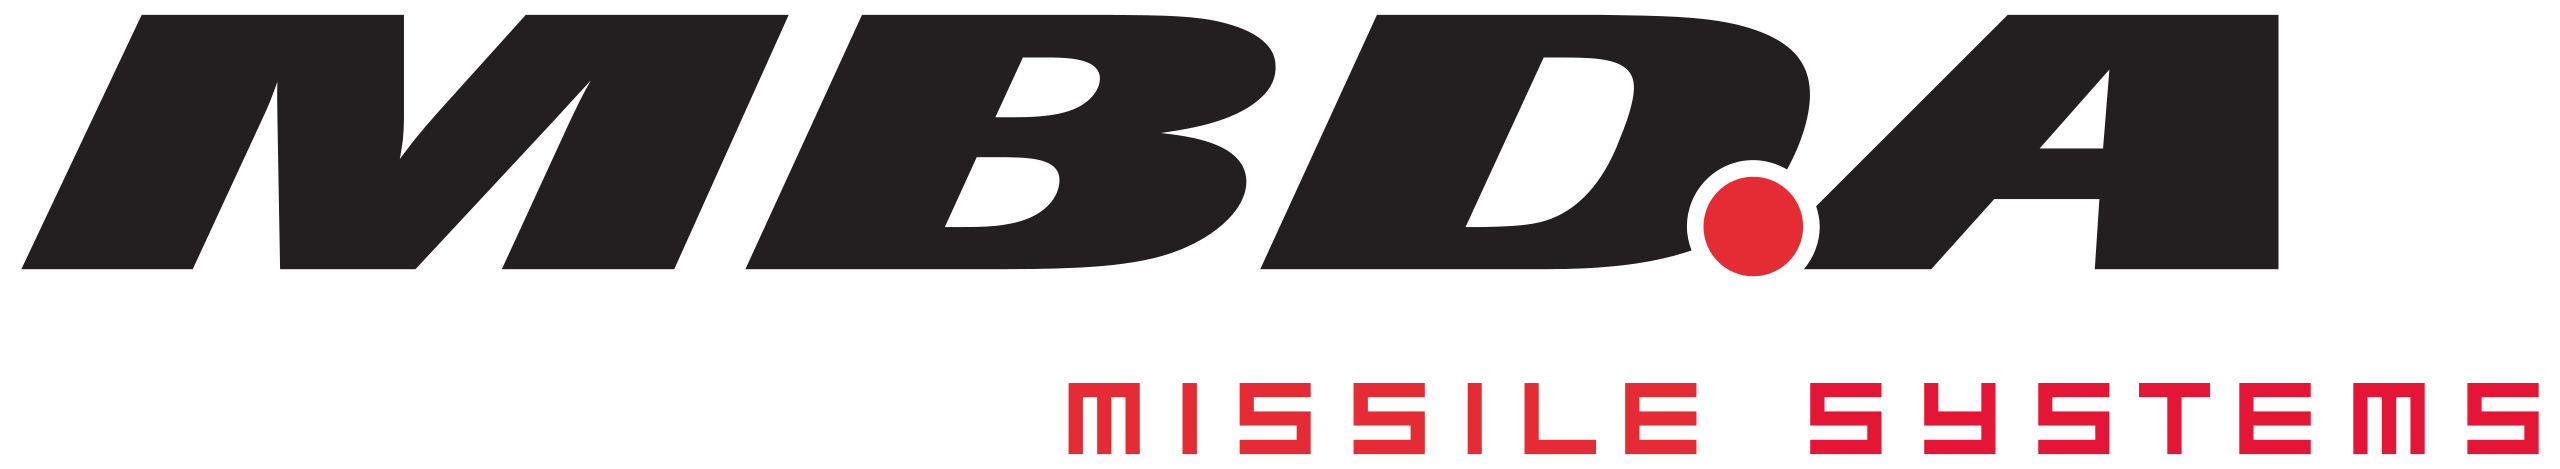 logo MBDA Missile systems